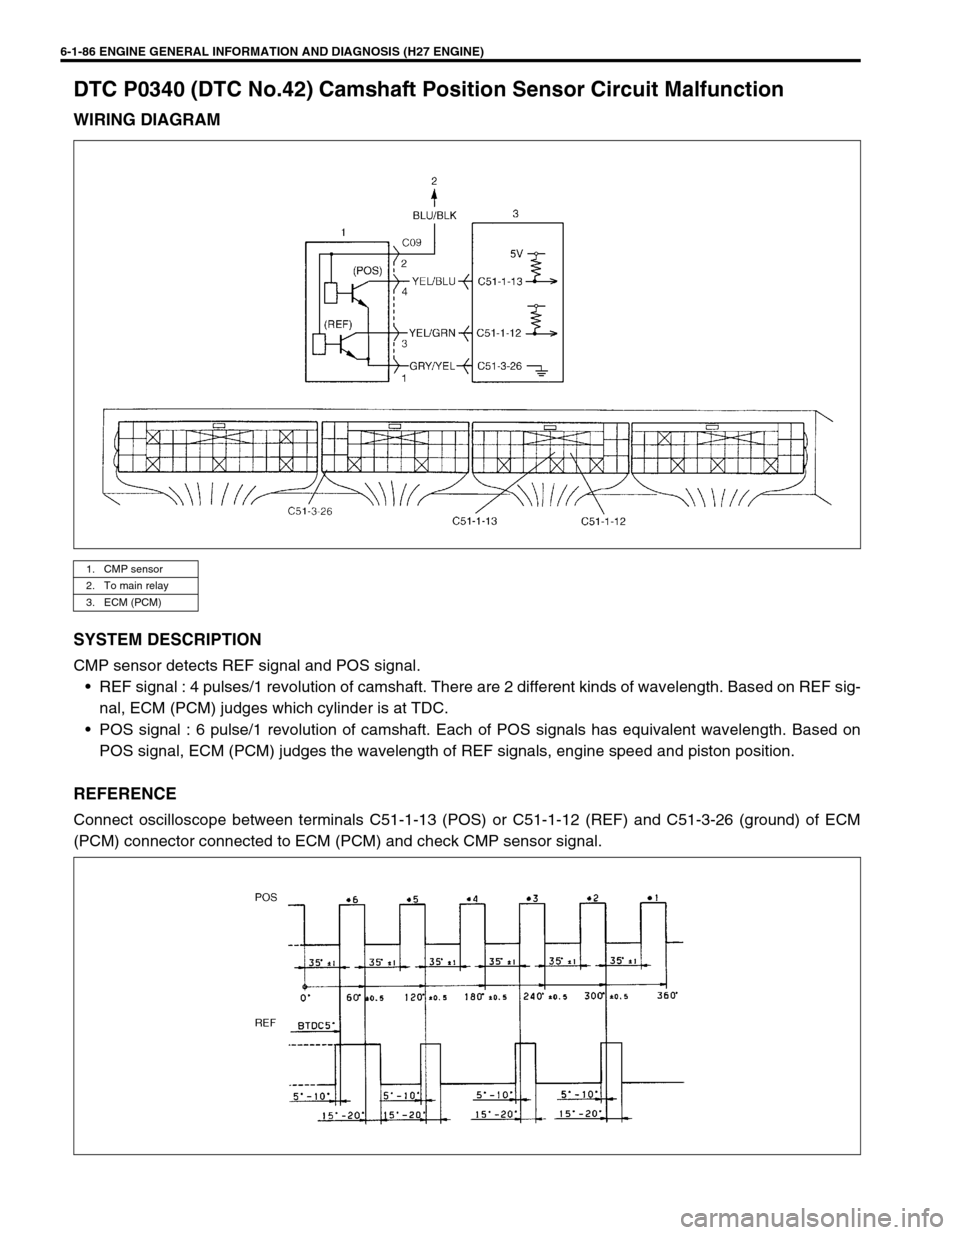 SUZUKI GRAND VITARA 2001 2.G Repair Manual 6-1-86 ENGINE GENERAL INFORMATION AND DIAGNOSIS (H27 ENGINE)
DTC P0340 (DTC No.42) Camshaft Position Sensor Circuit Malfunction
WIRING DIAGRAM
SYSTEM DESCRIPTION
CMP sensor detects REF signal and POS 